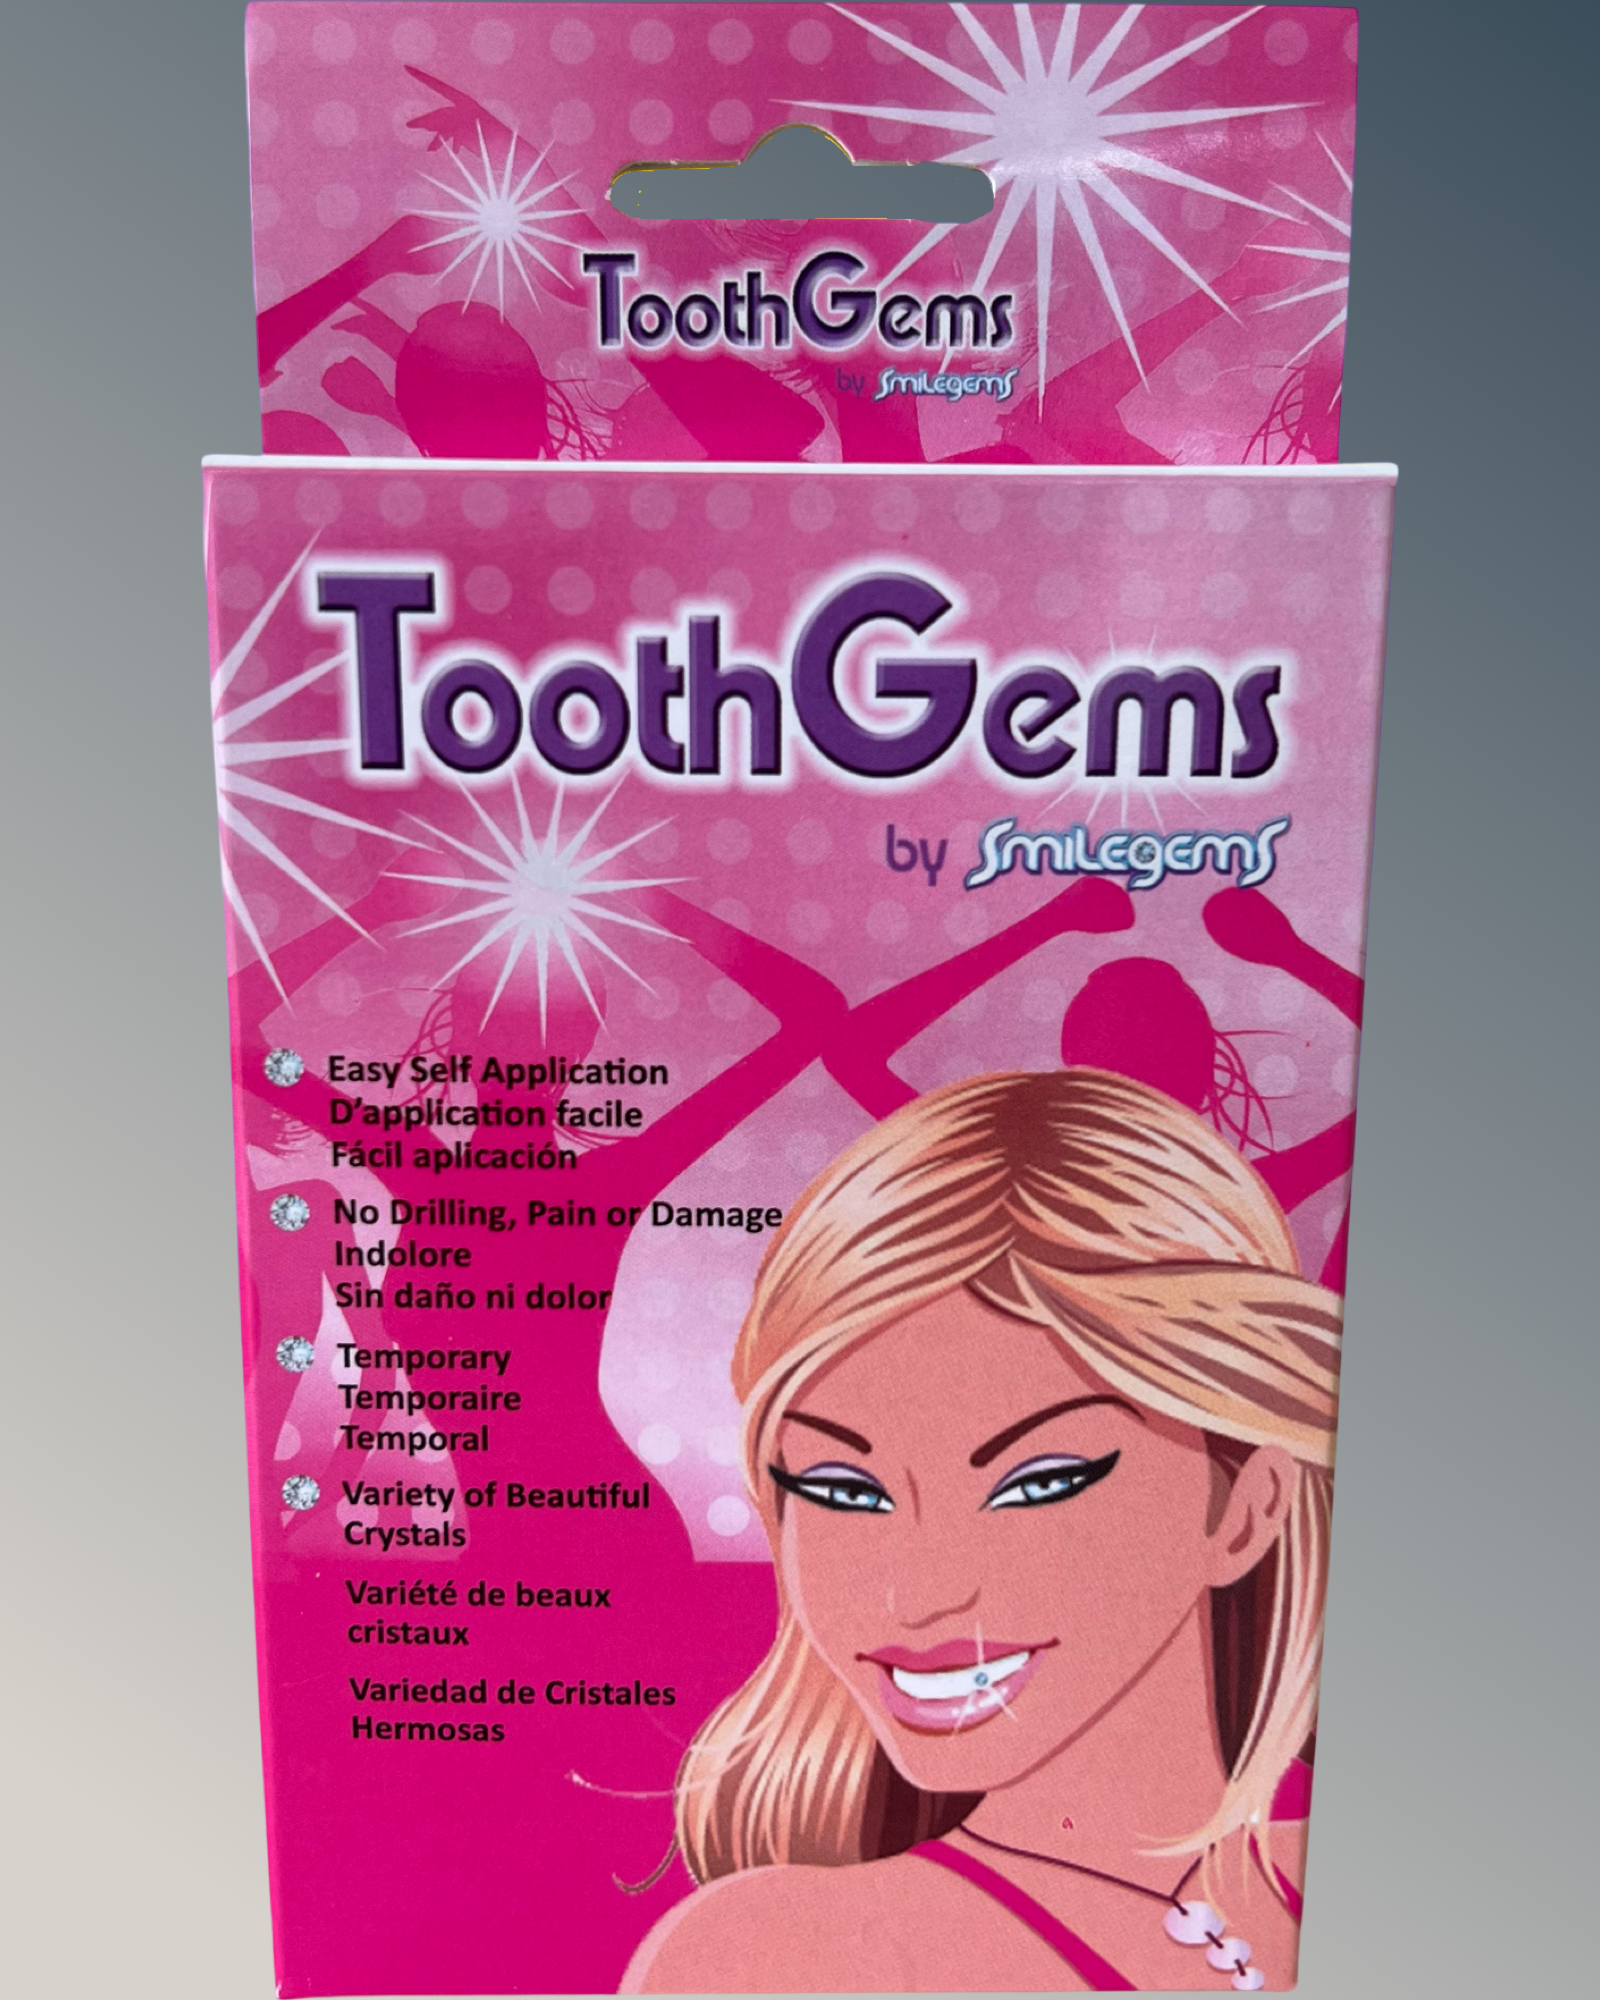 DIY At Home Tooth Gem Kit Deal - Wowcher